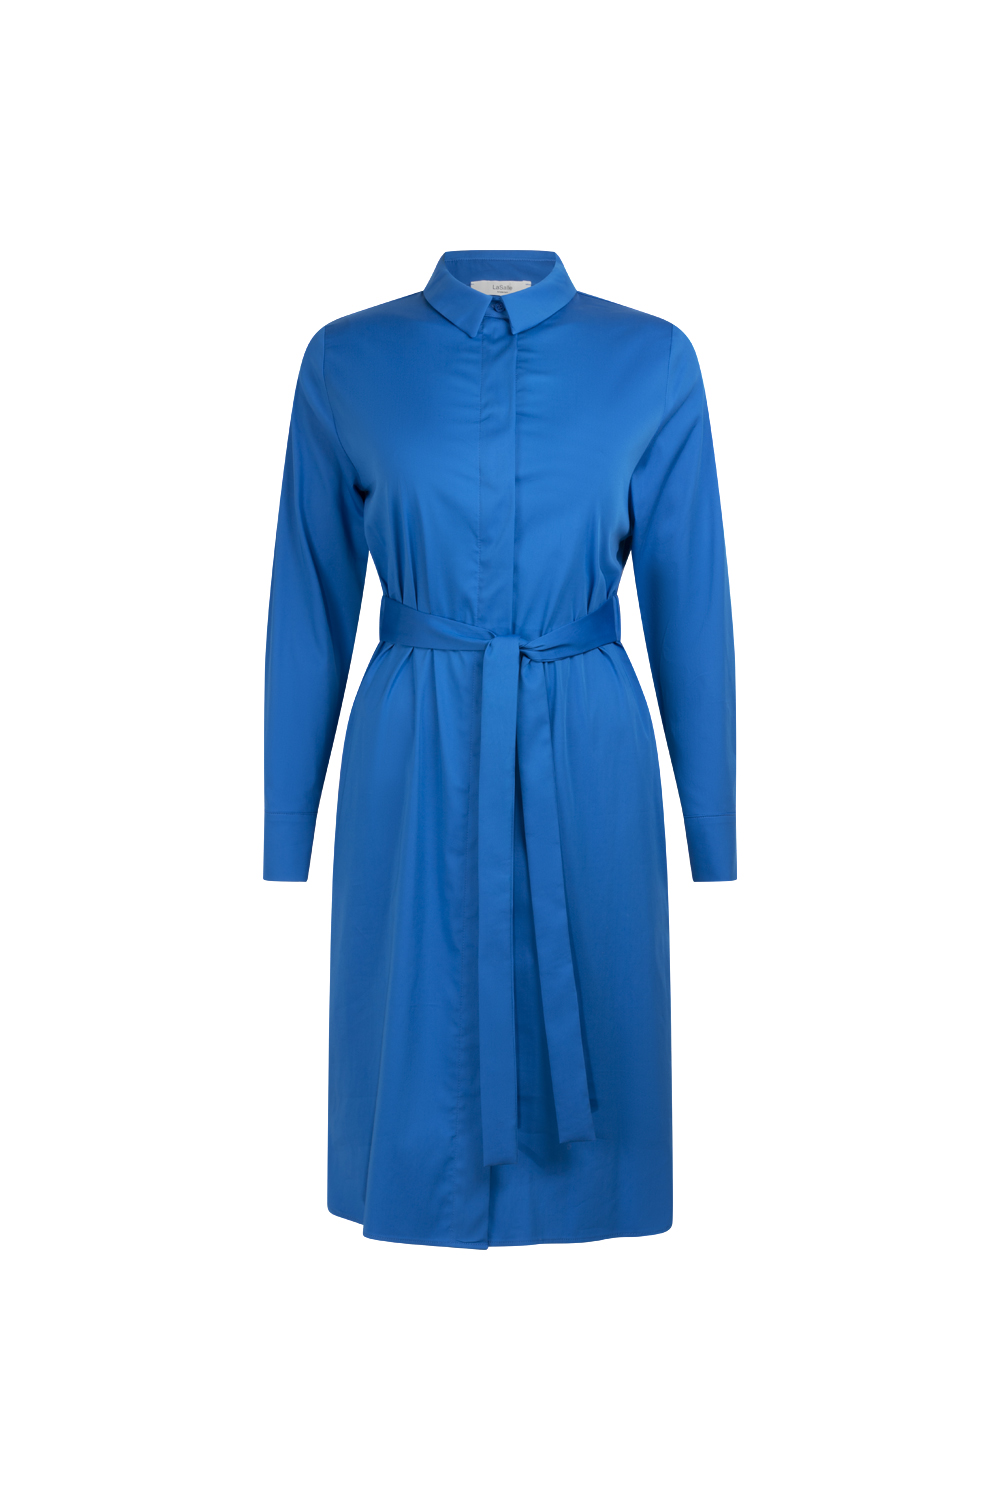 Belted dress tunic royal blue